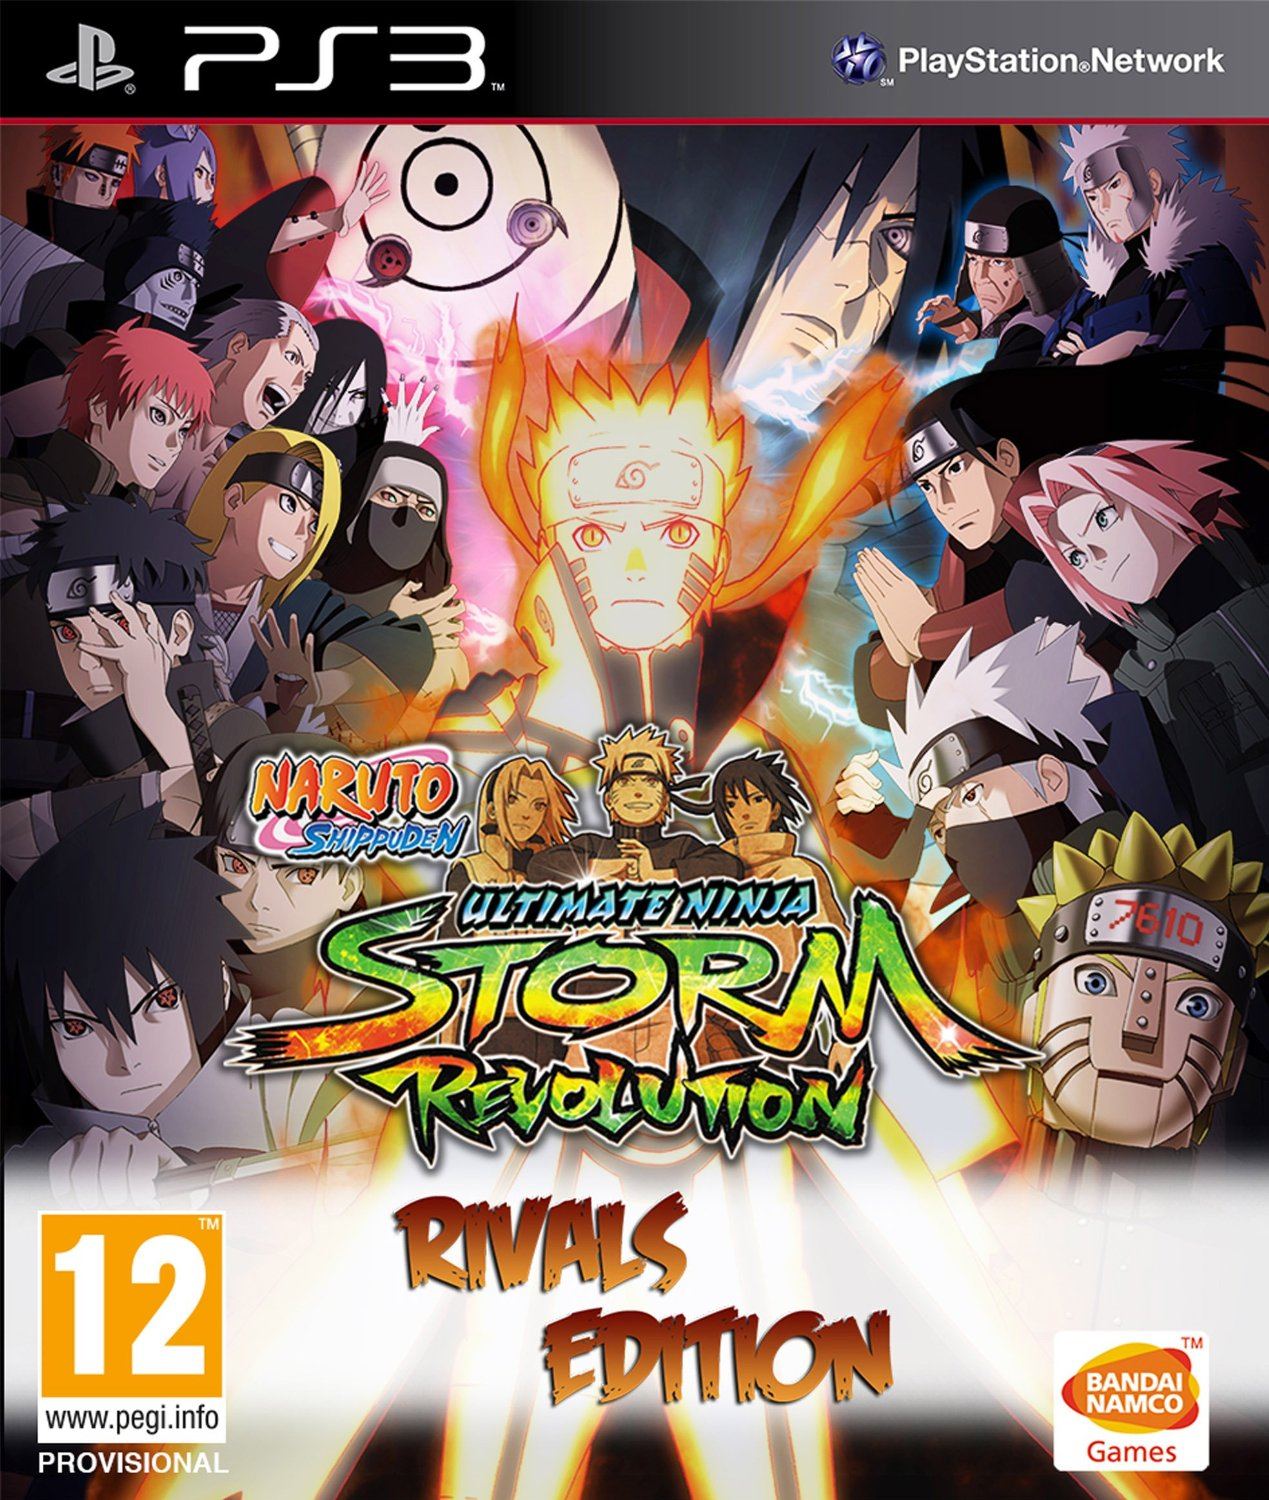 Naruto Shippuden Ultimate Ninja Storm Revolution: Top 10 Facts